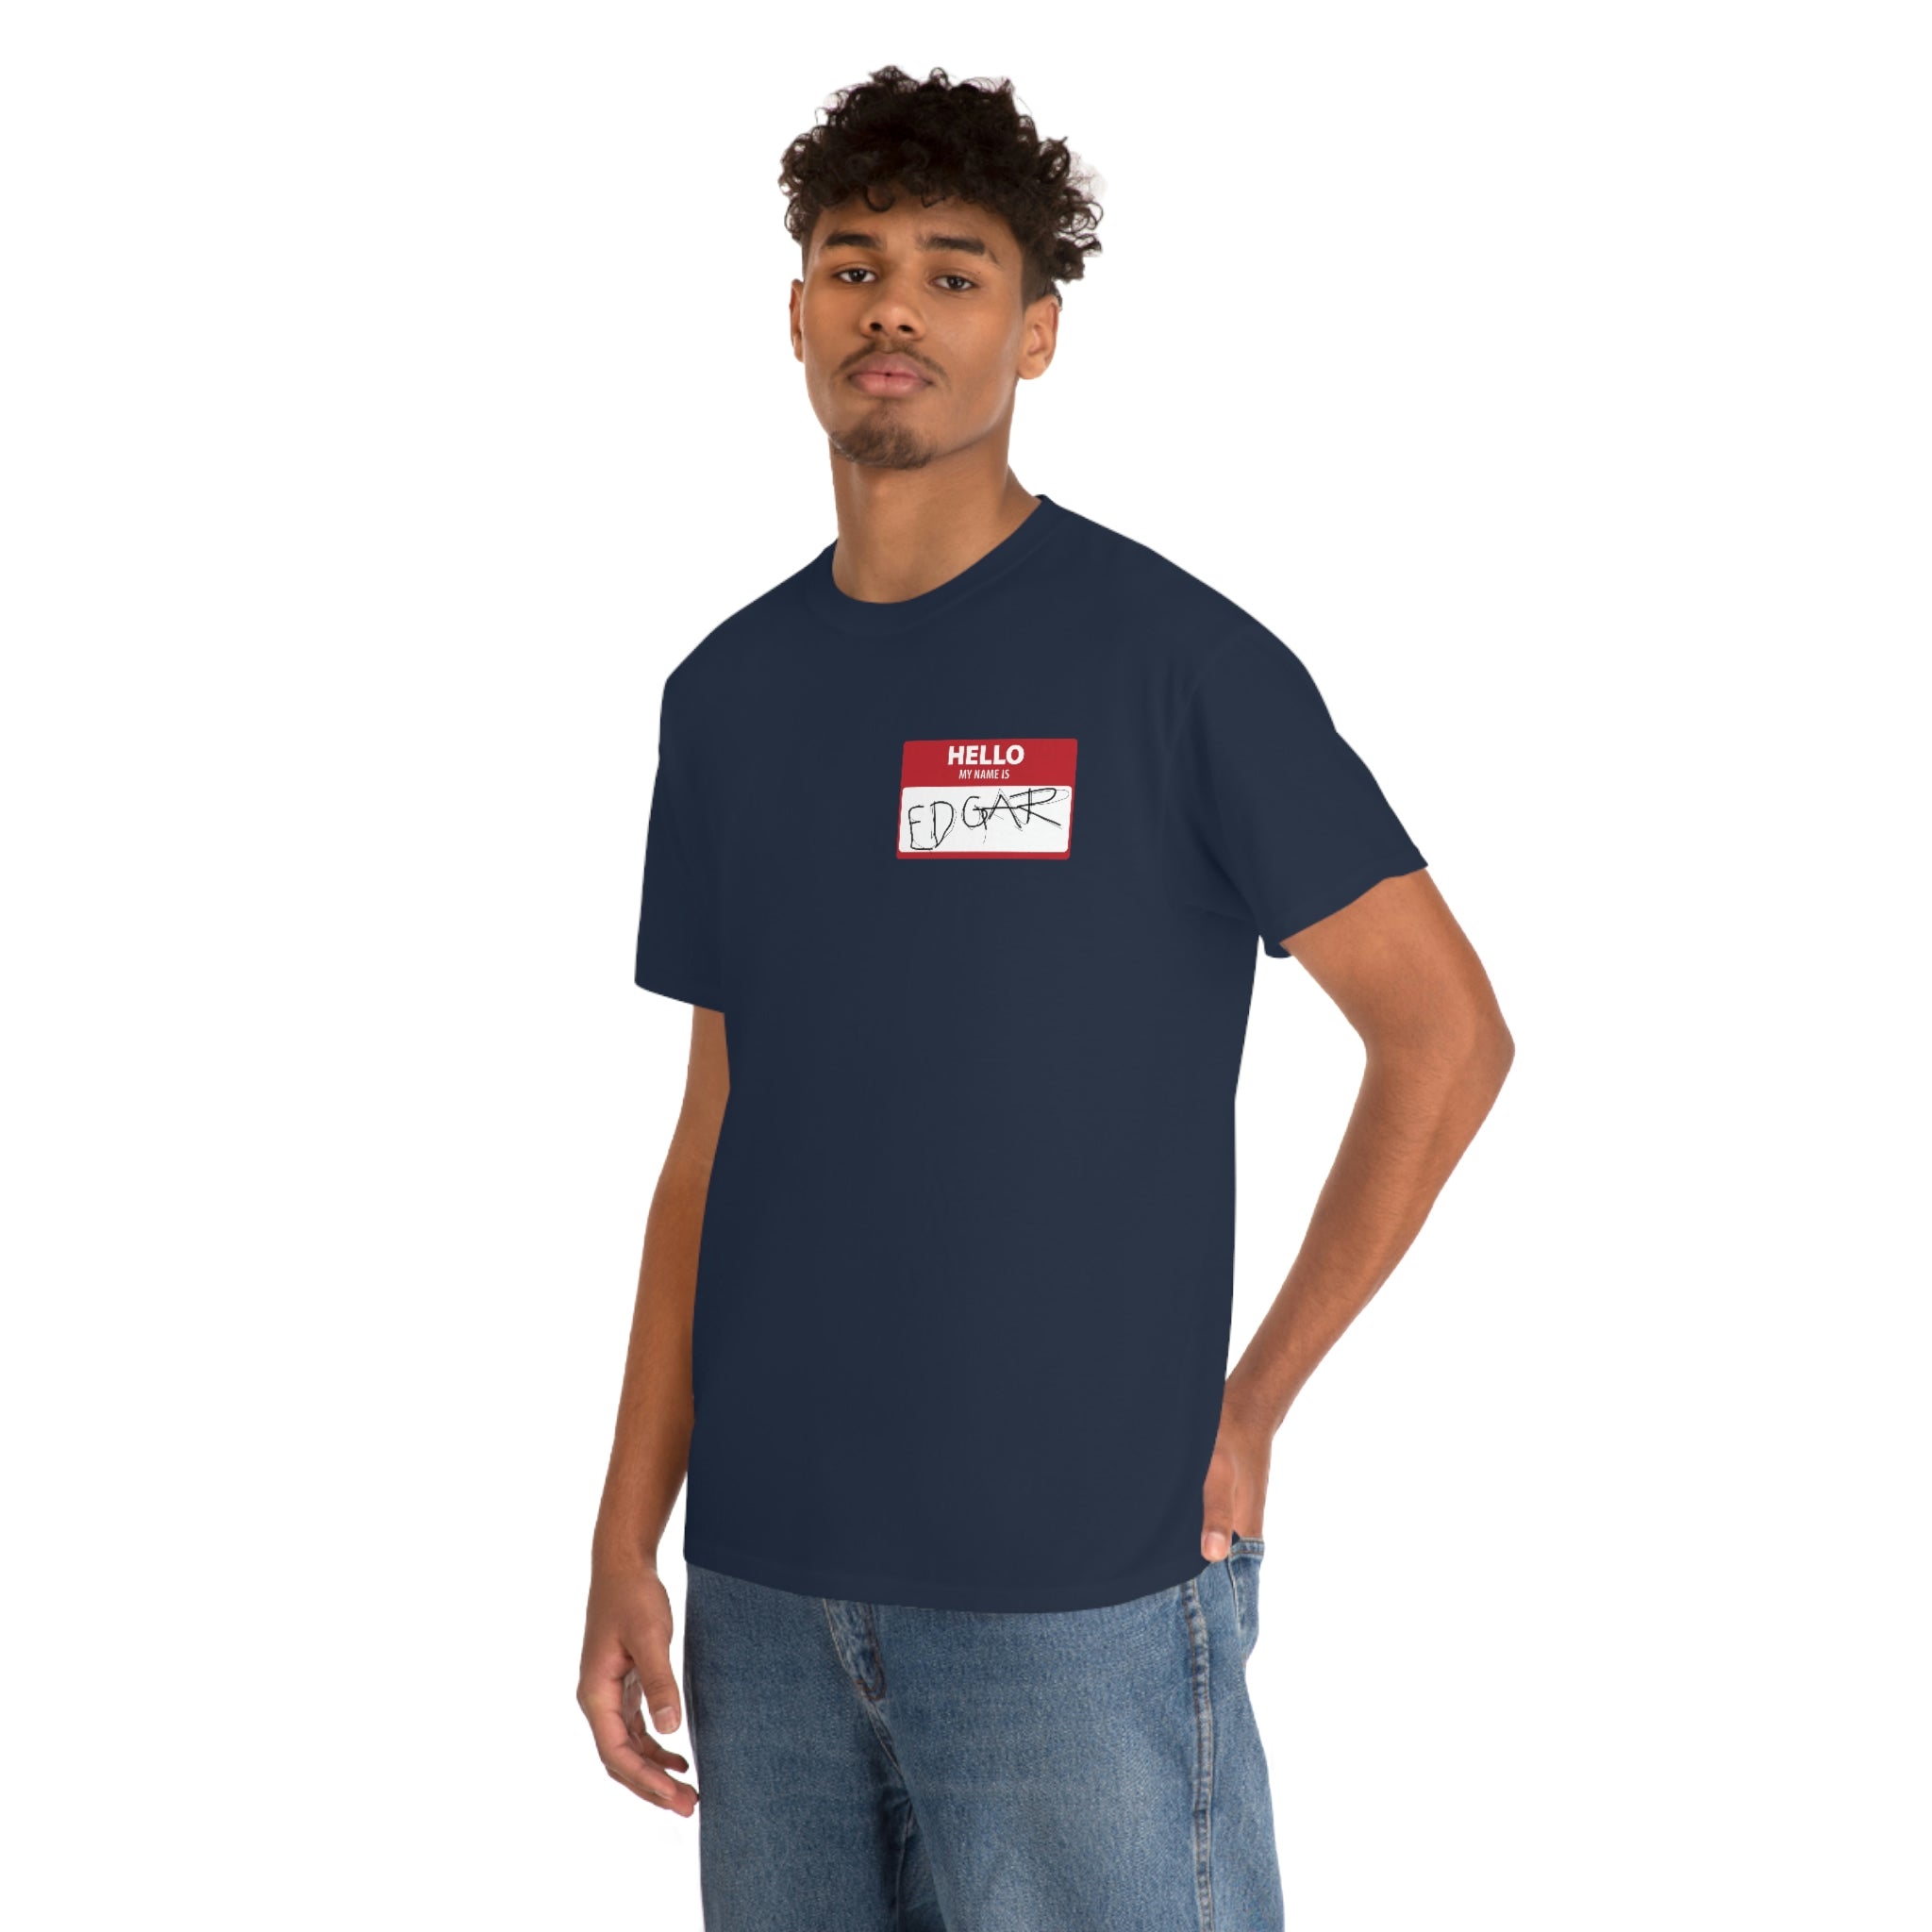 Edgar Name Tag Cotton Standard Fit Shirt